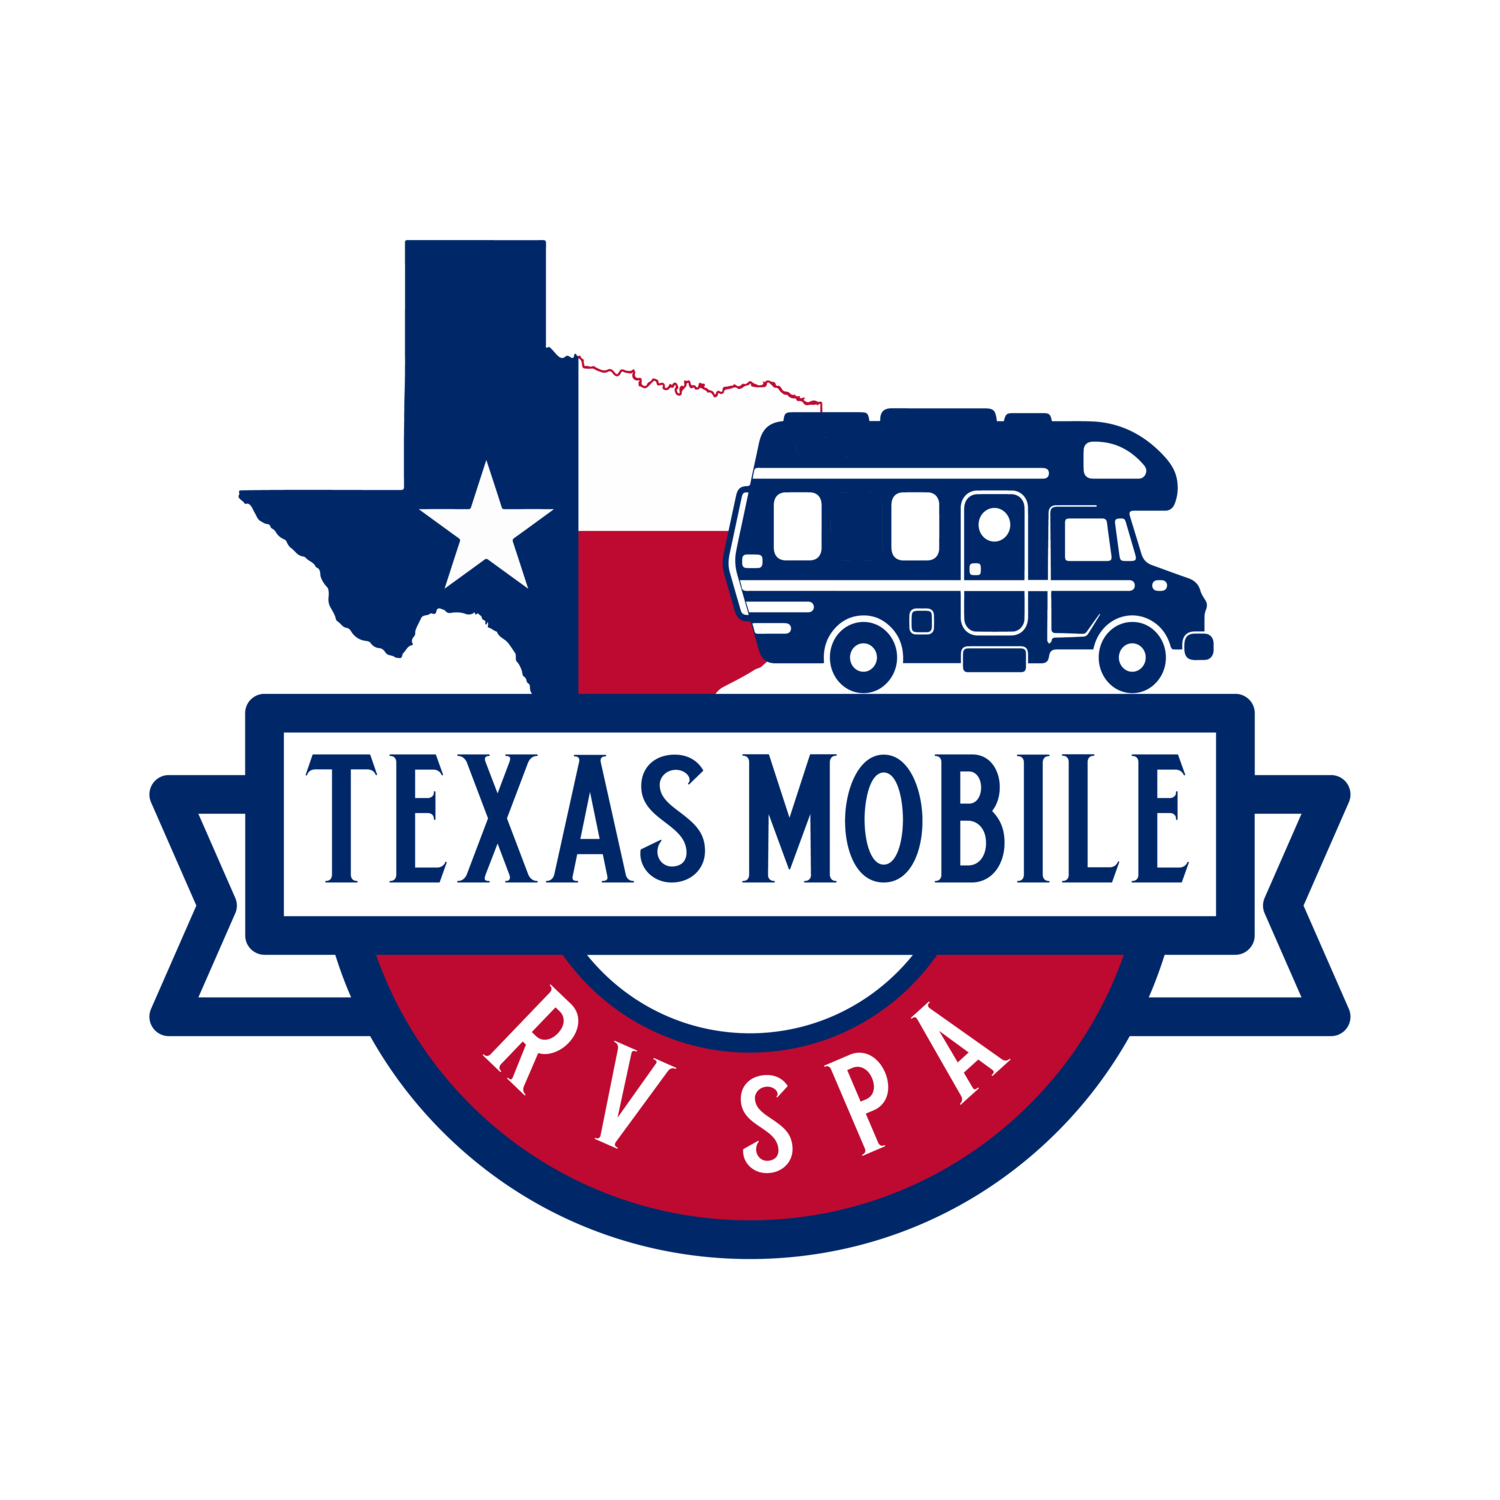 Texas Mobile RV Spa